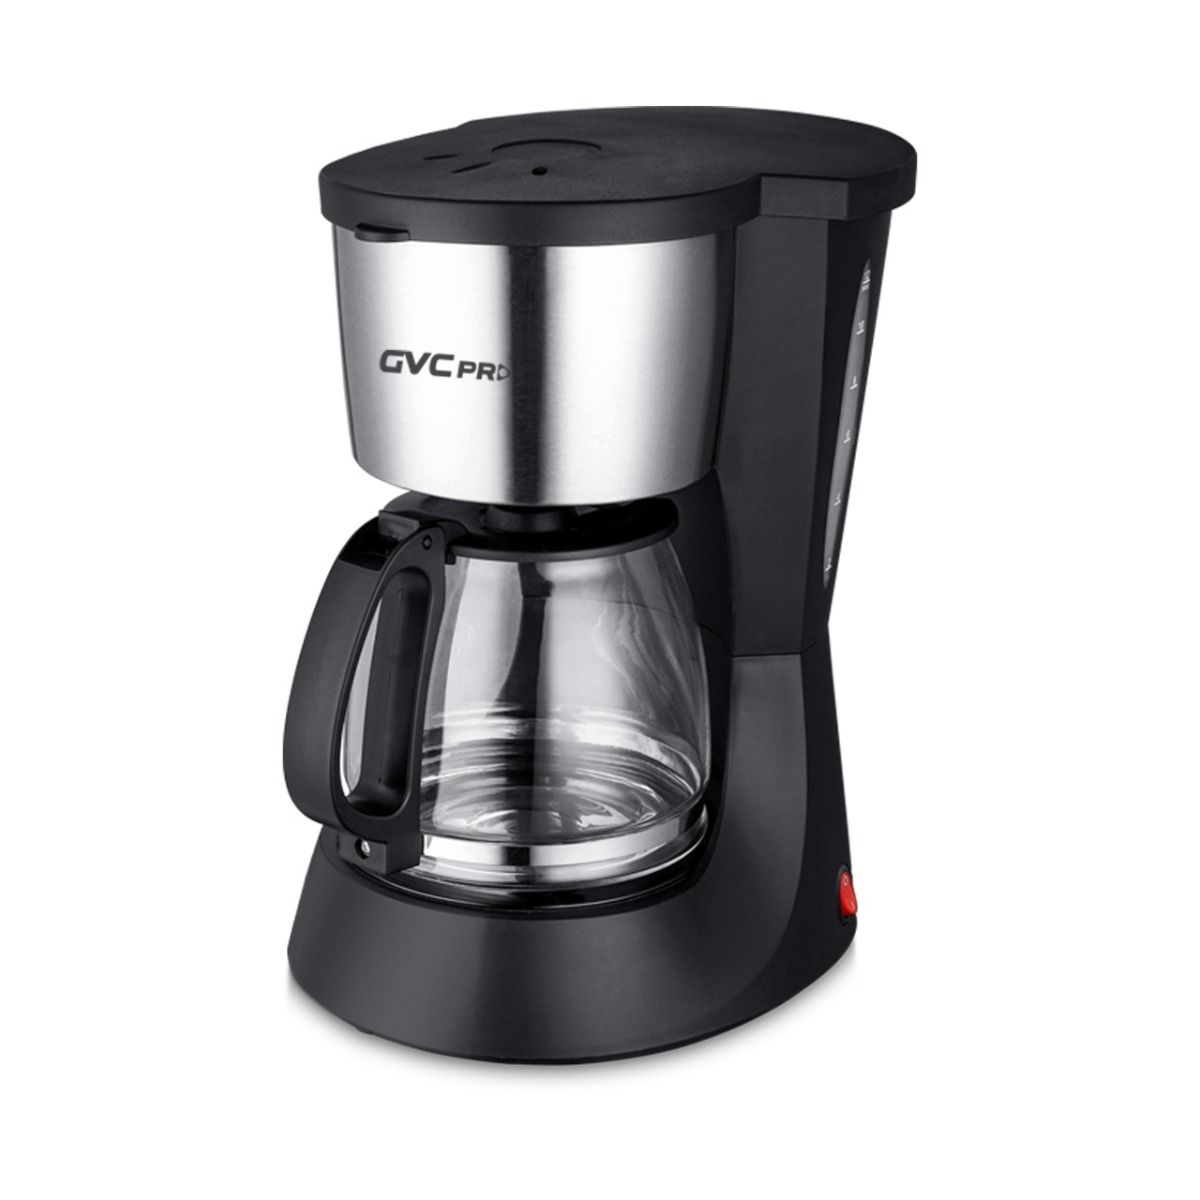 GVC Pro Coffee Maker, 1000 Watt, 1.6 Liter, Silver, GVCM-1811